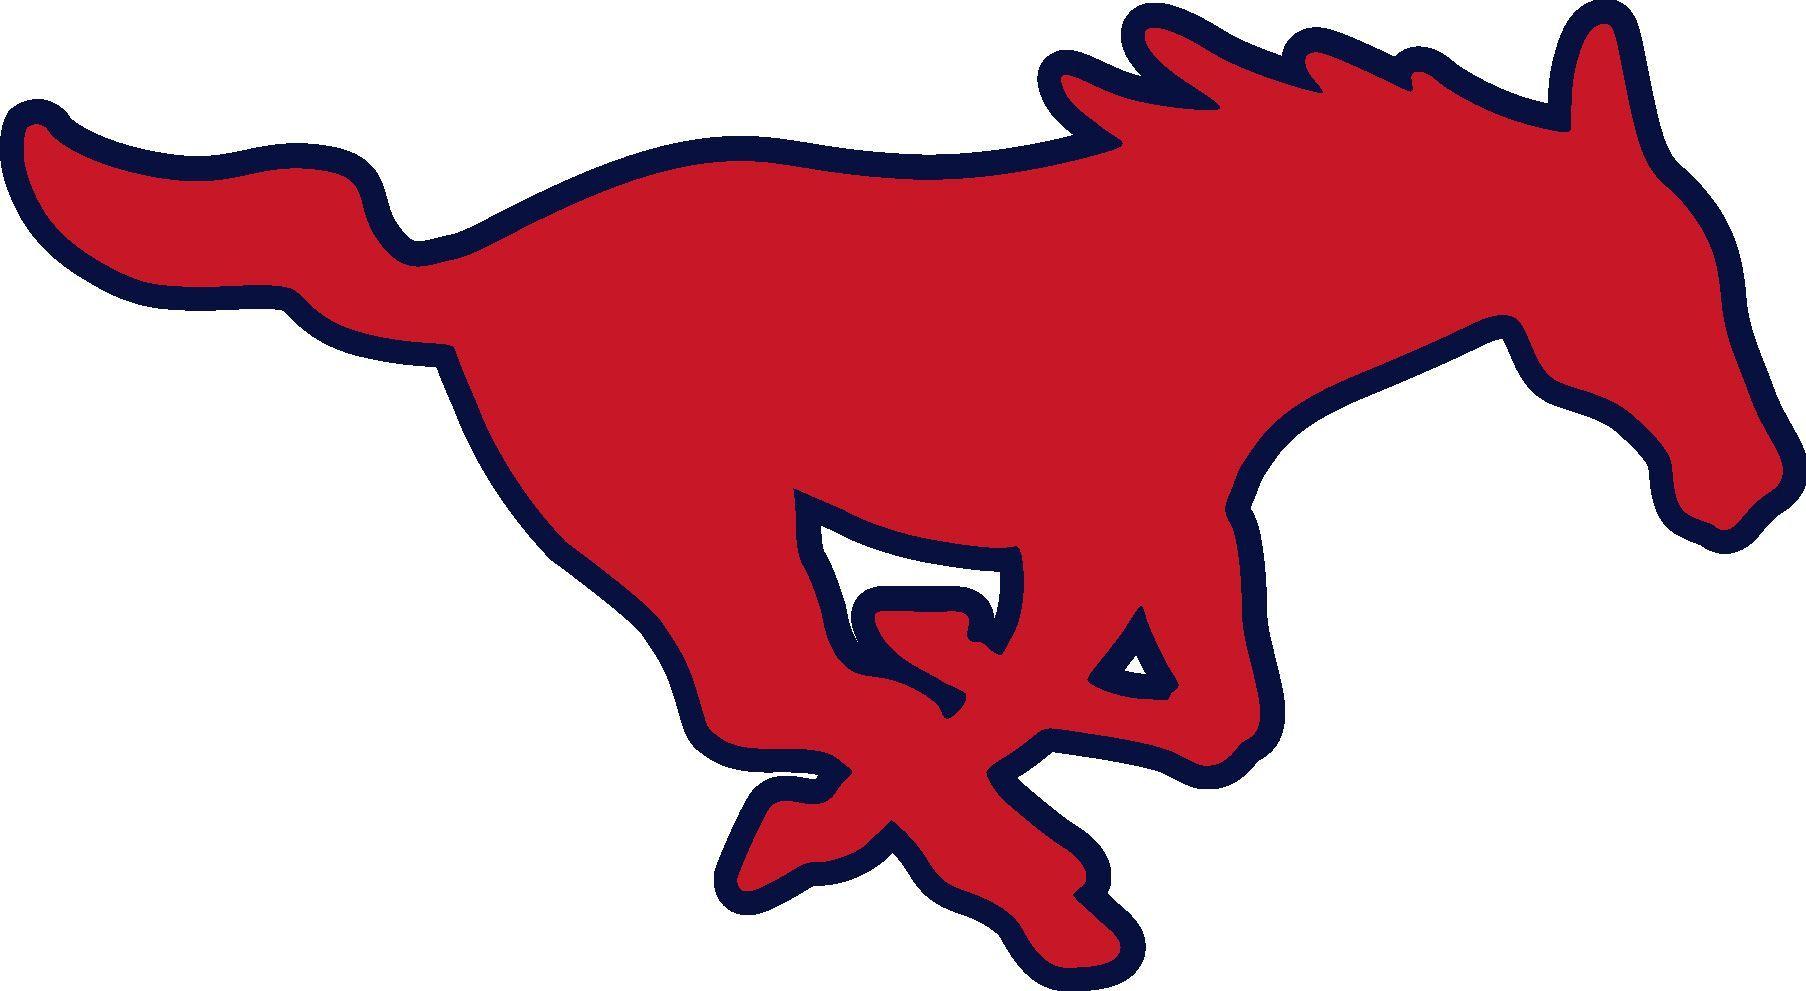 Mustang Mascot Logo - Mustang Mascot Logo | Free Download Clip Art | Free Clip Art | on ...